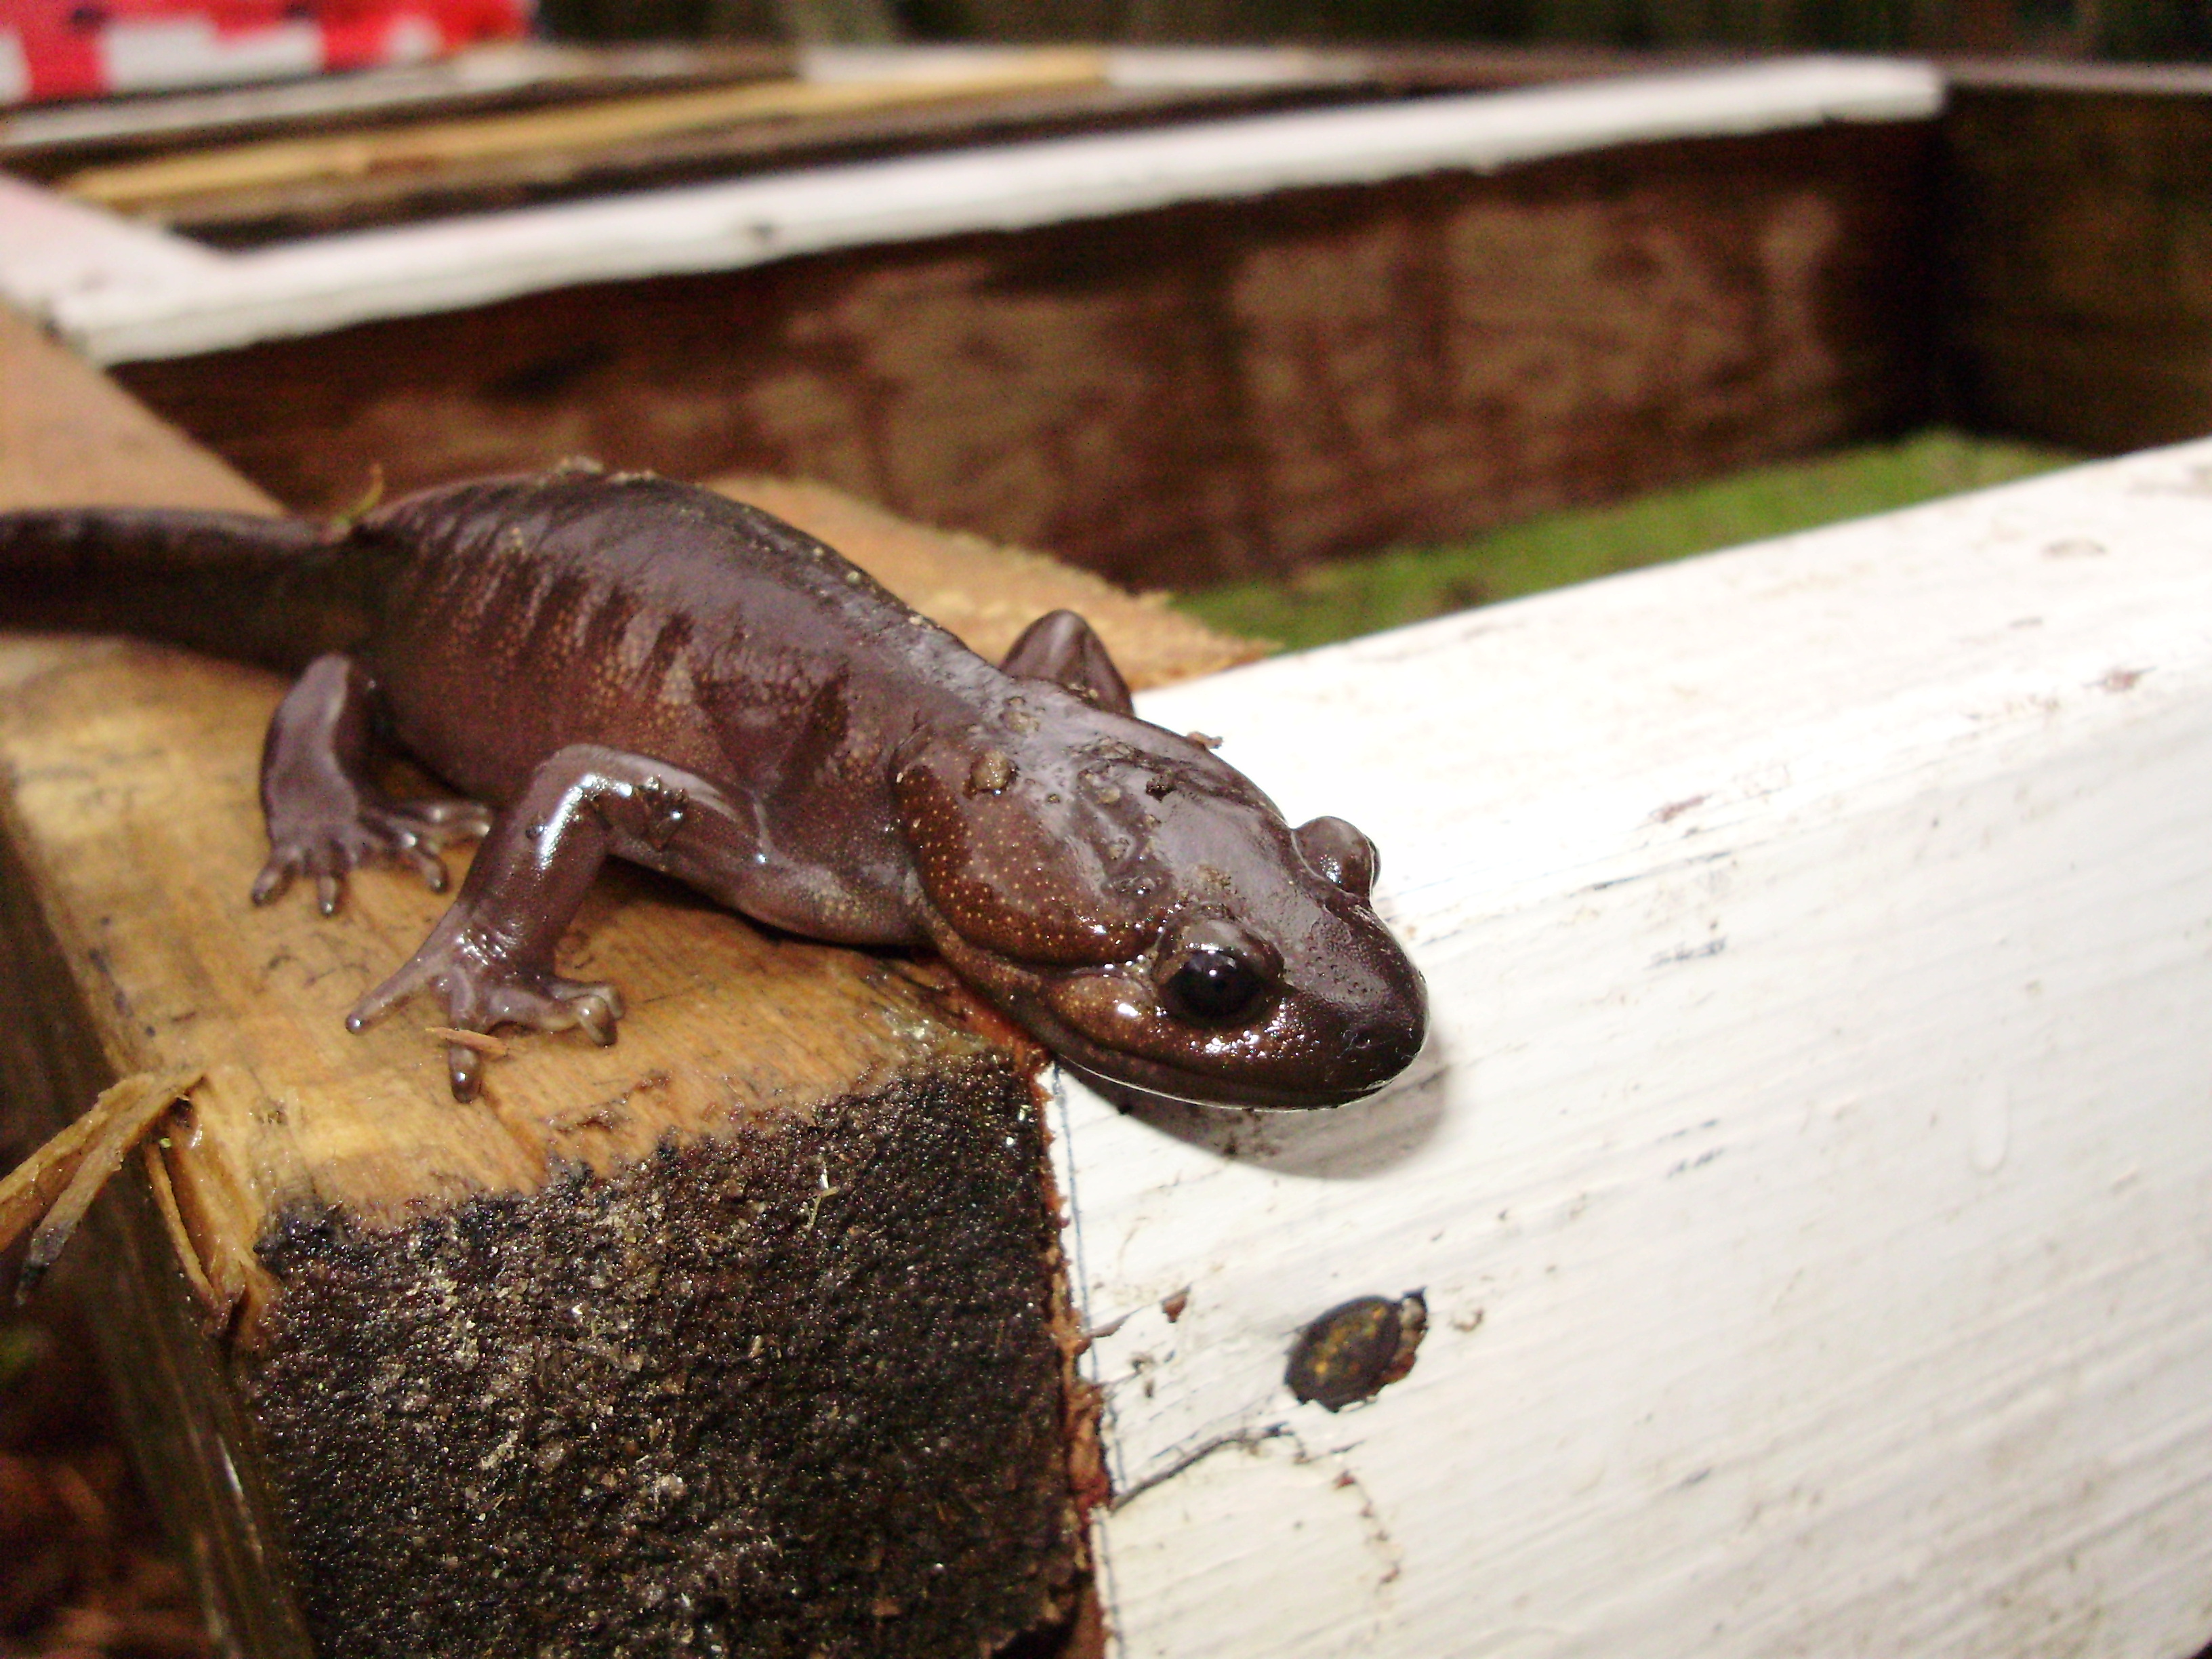 File:Northwestern salamander.jpg - Wikimedia Commons